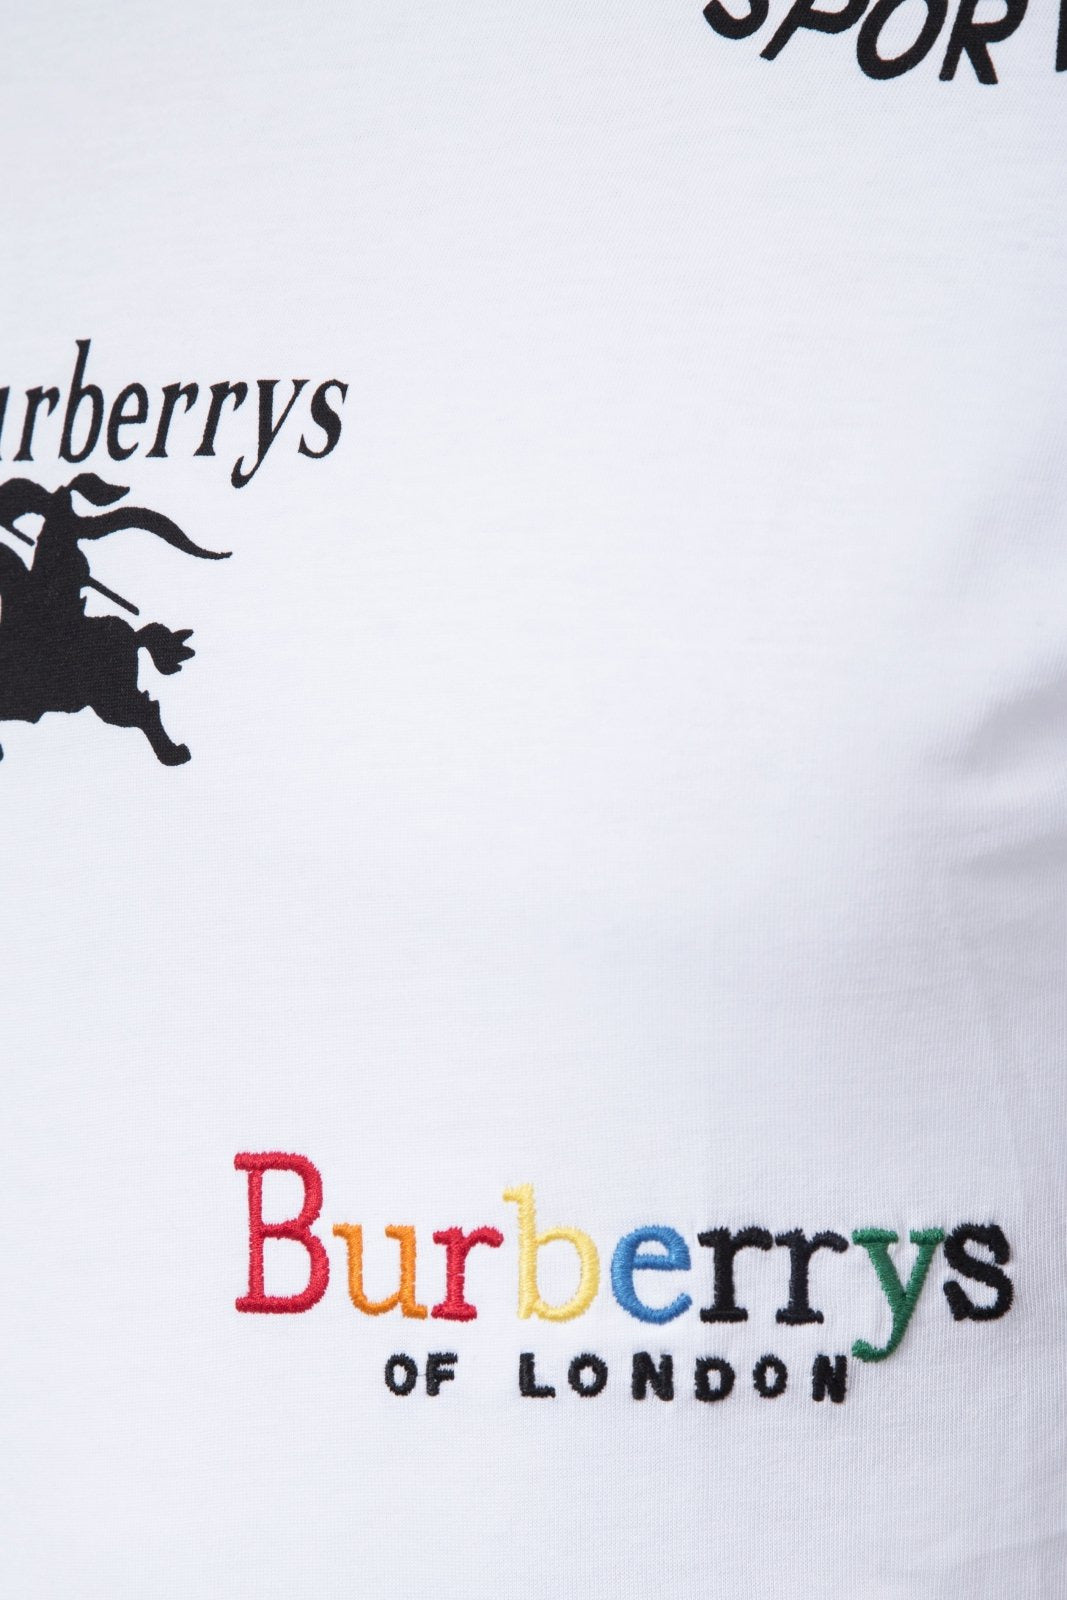 Burberry T Shirt - Giltenergy